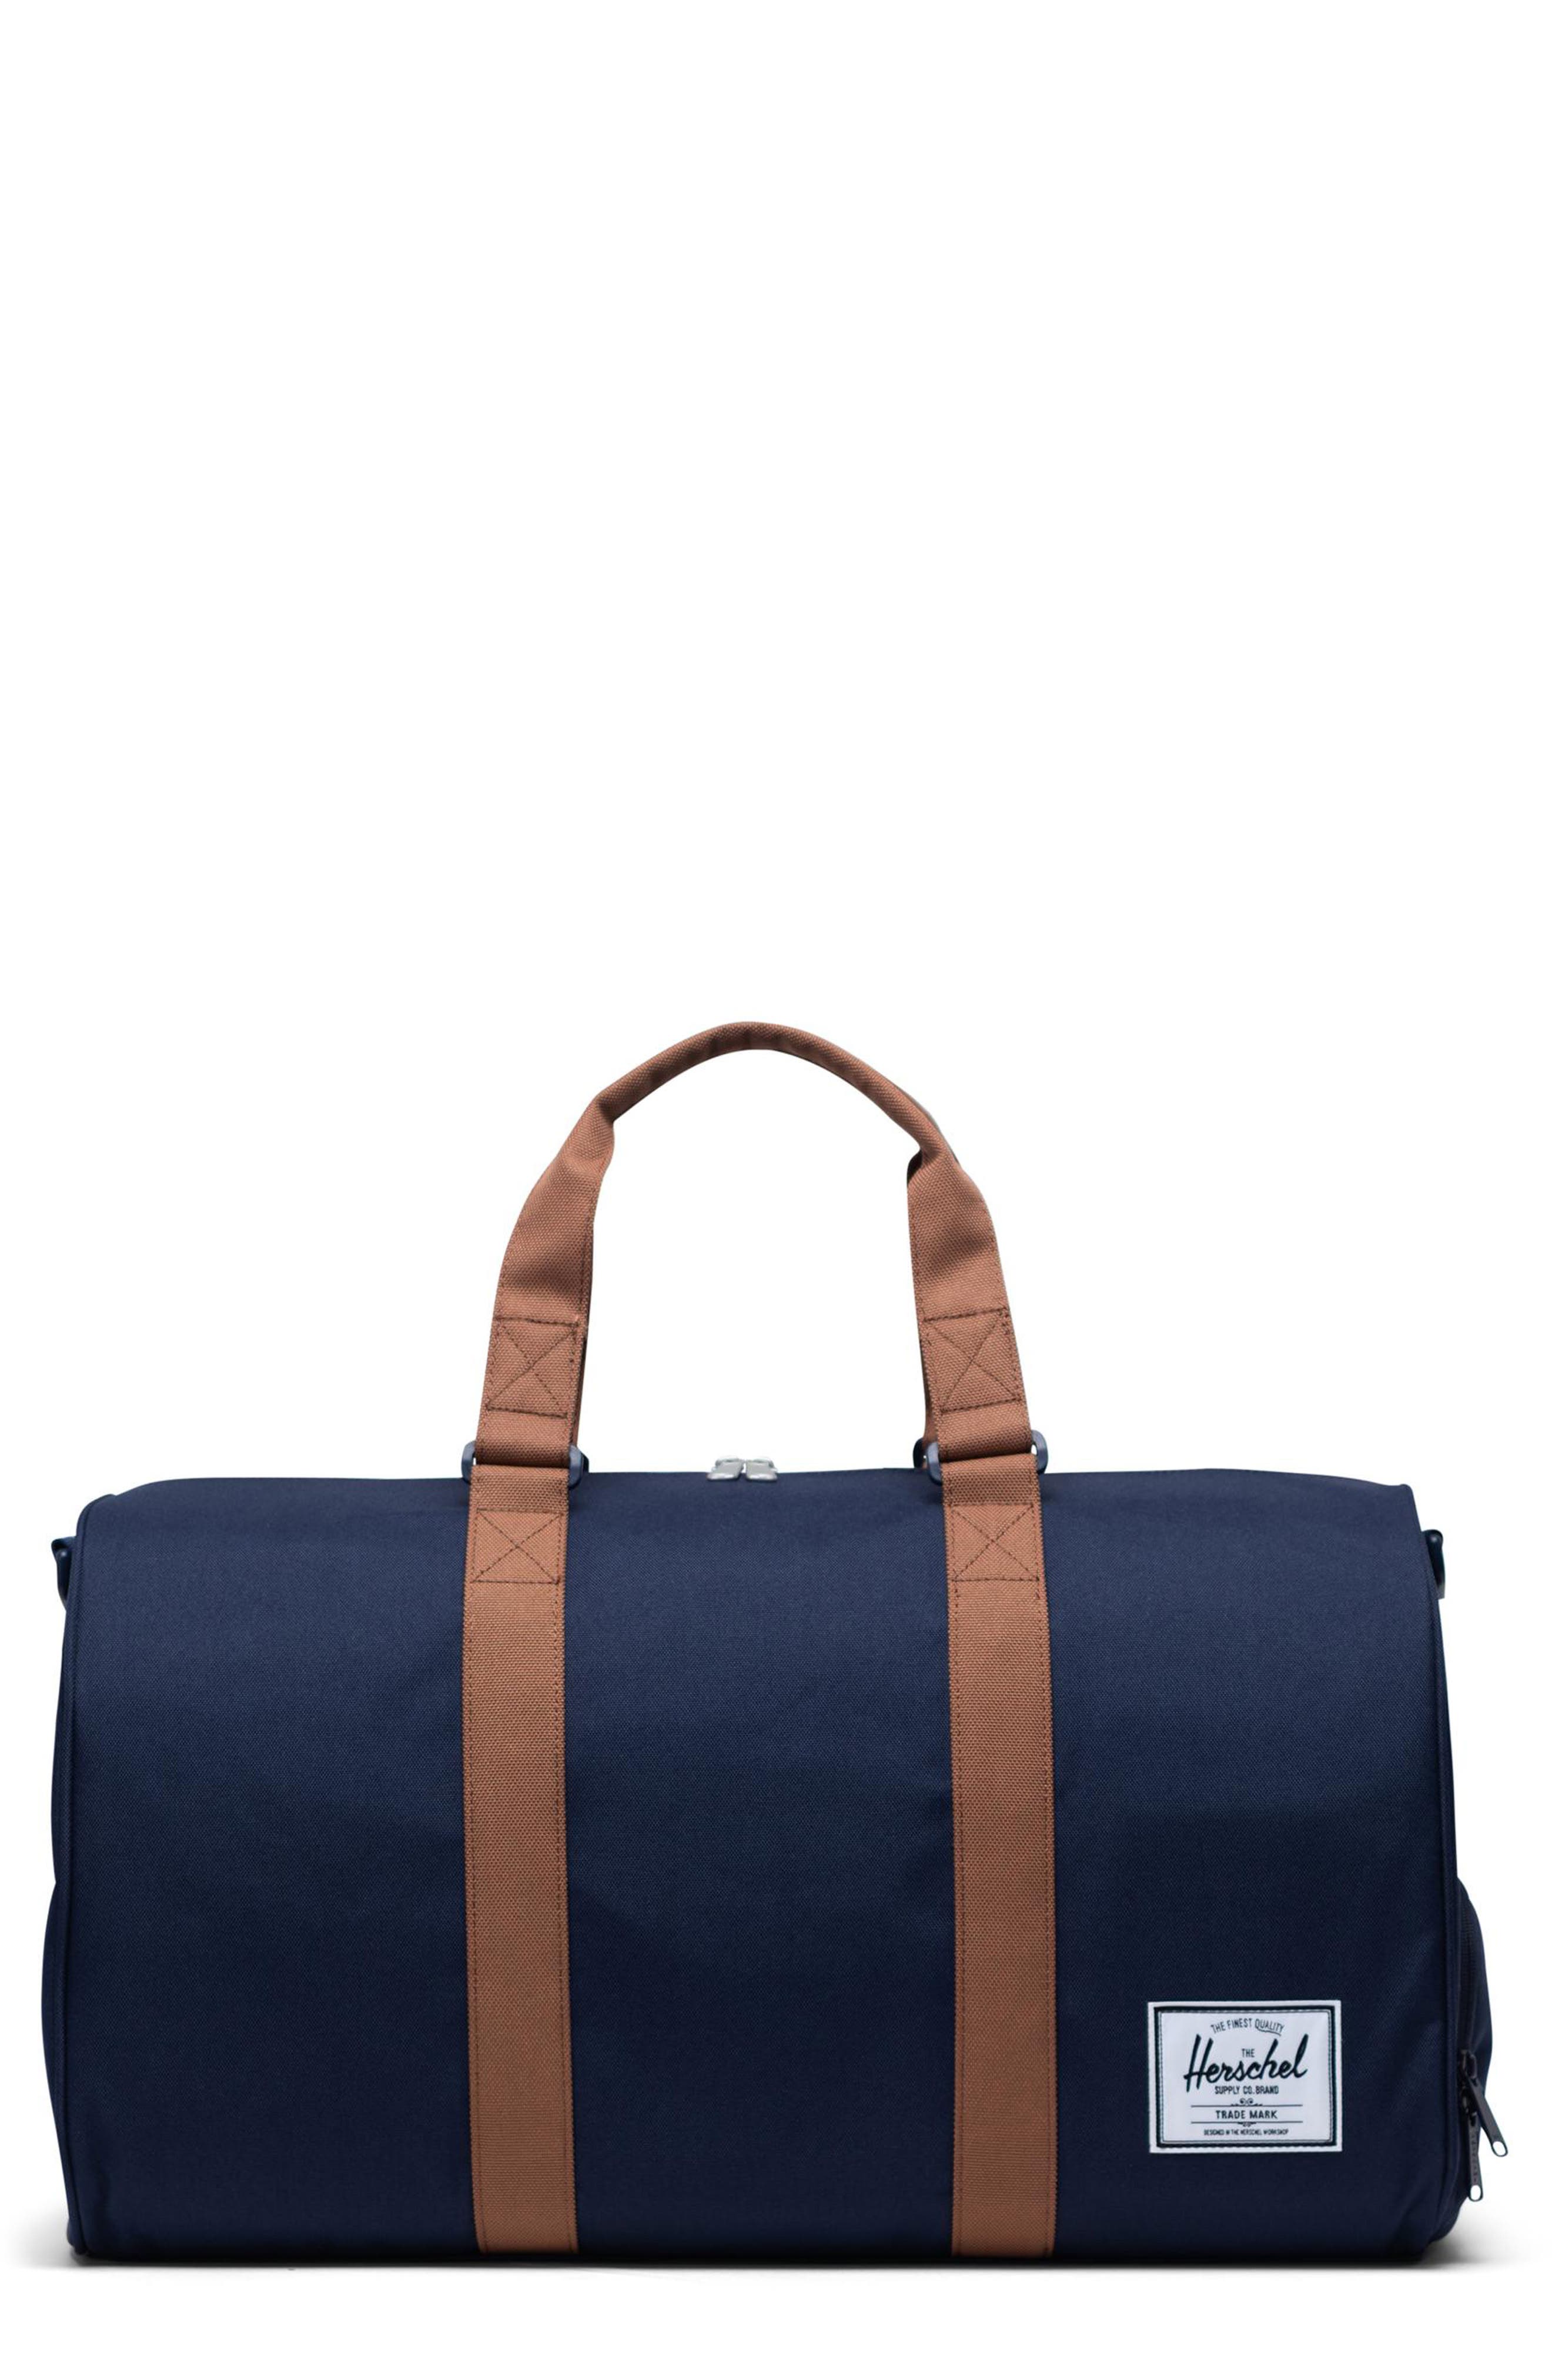 Mens Bags Duffel bags and weekend bags Michael Kors Synthetic Navy Blue Nylon Weekender Bag Holdall for Men 